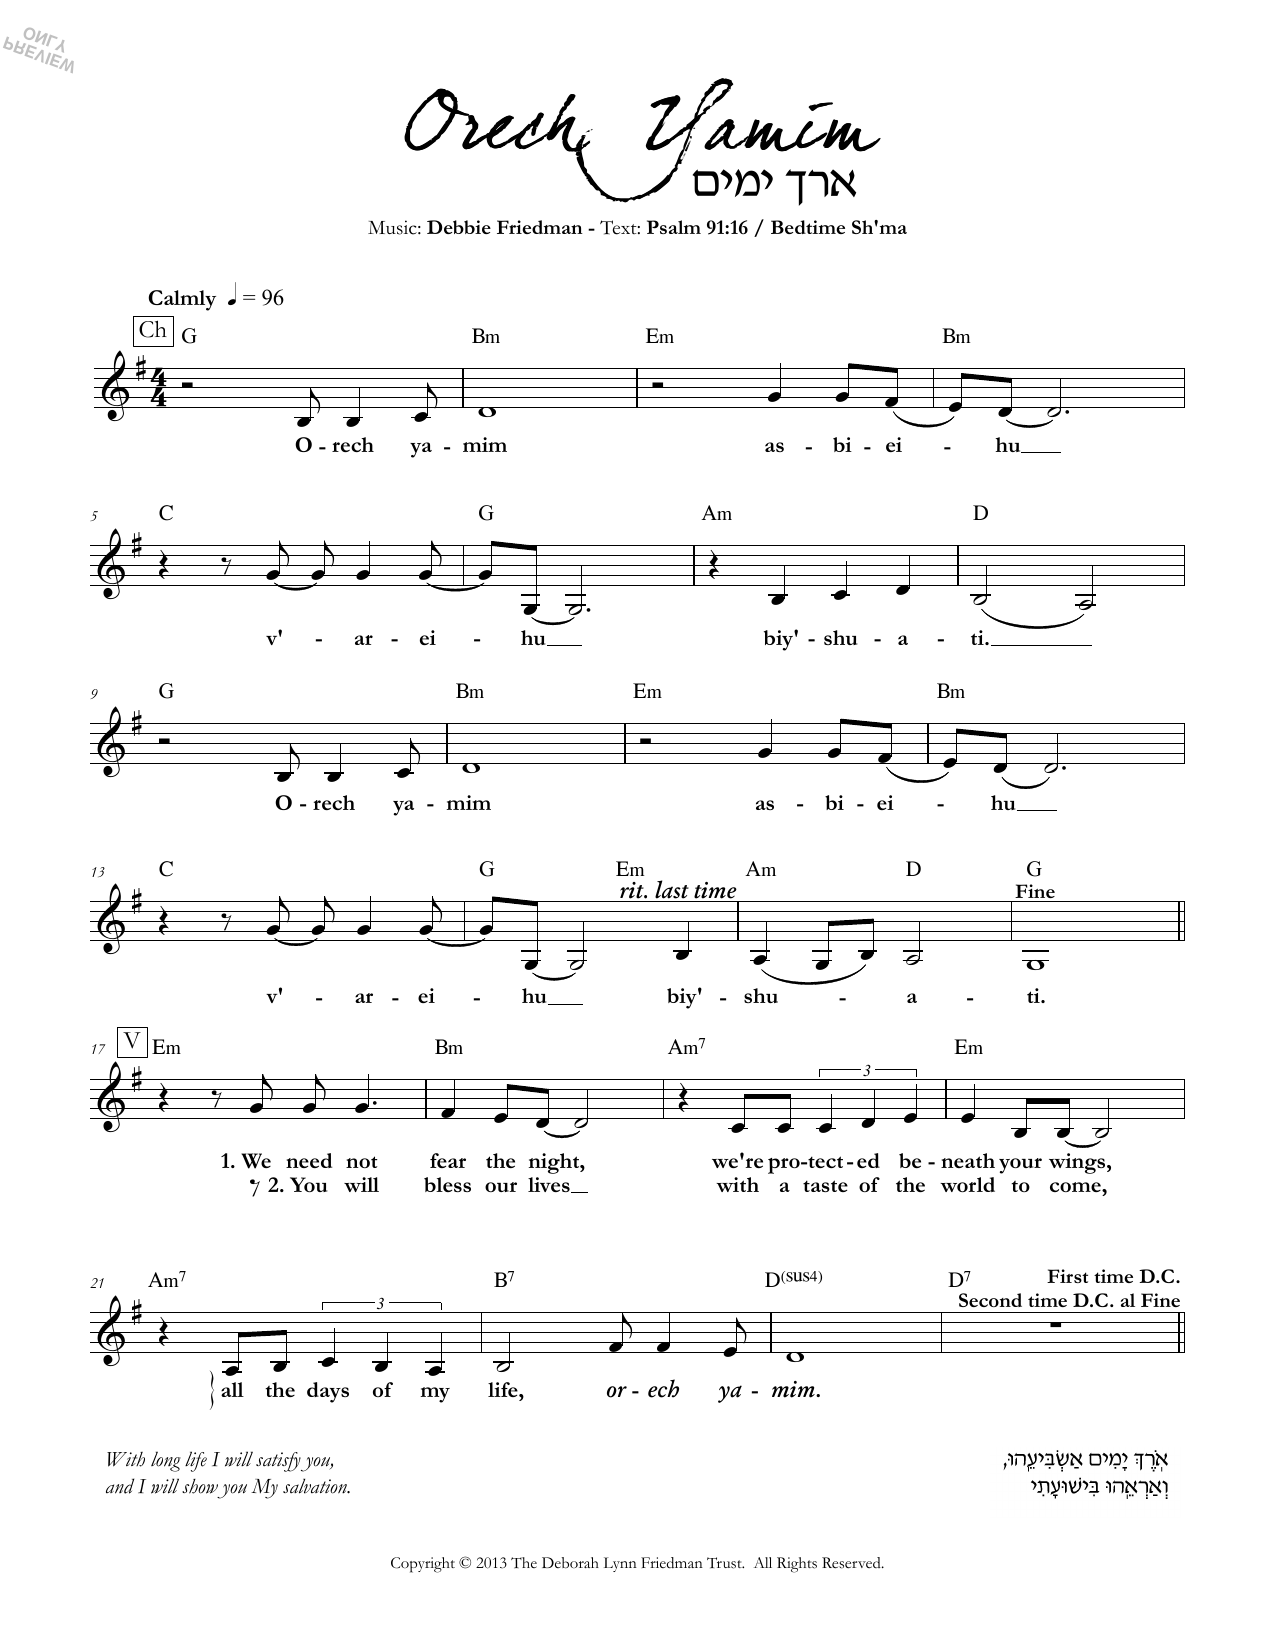 Debbie Friedman Orech Yamim Sheet Music Notes & Chords for Lead Sheet / Fake Book - Download or Print PDF